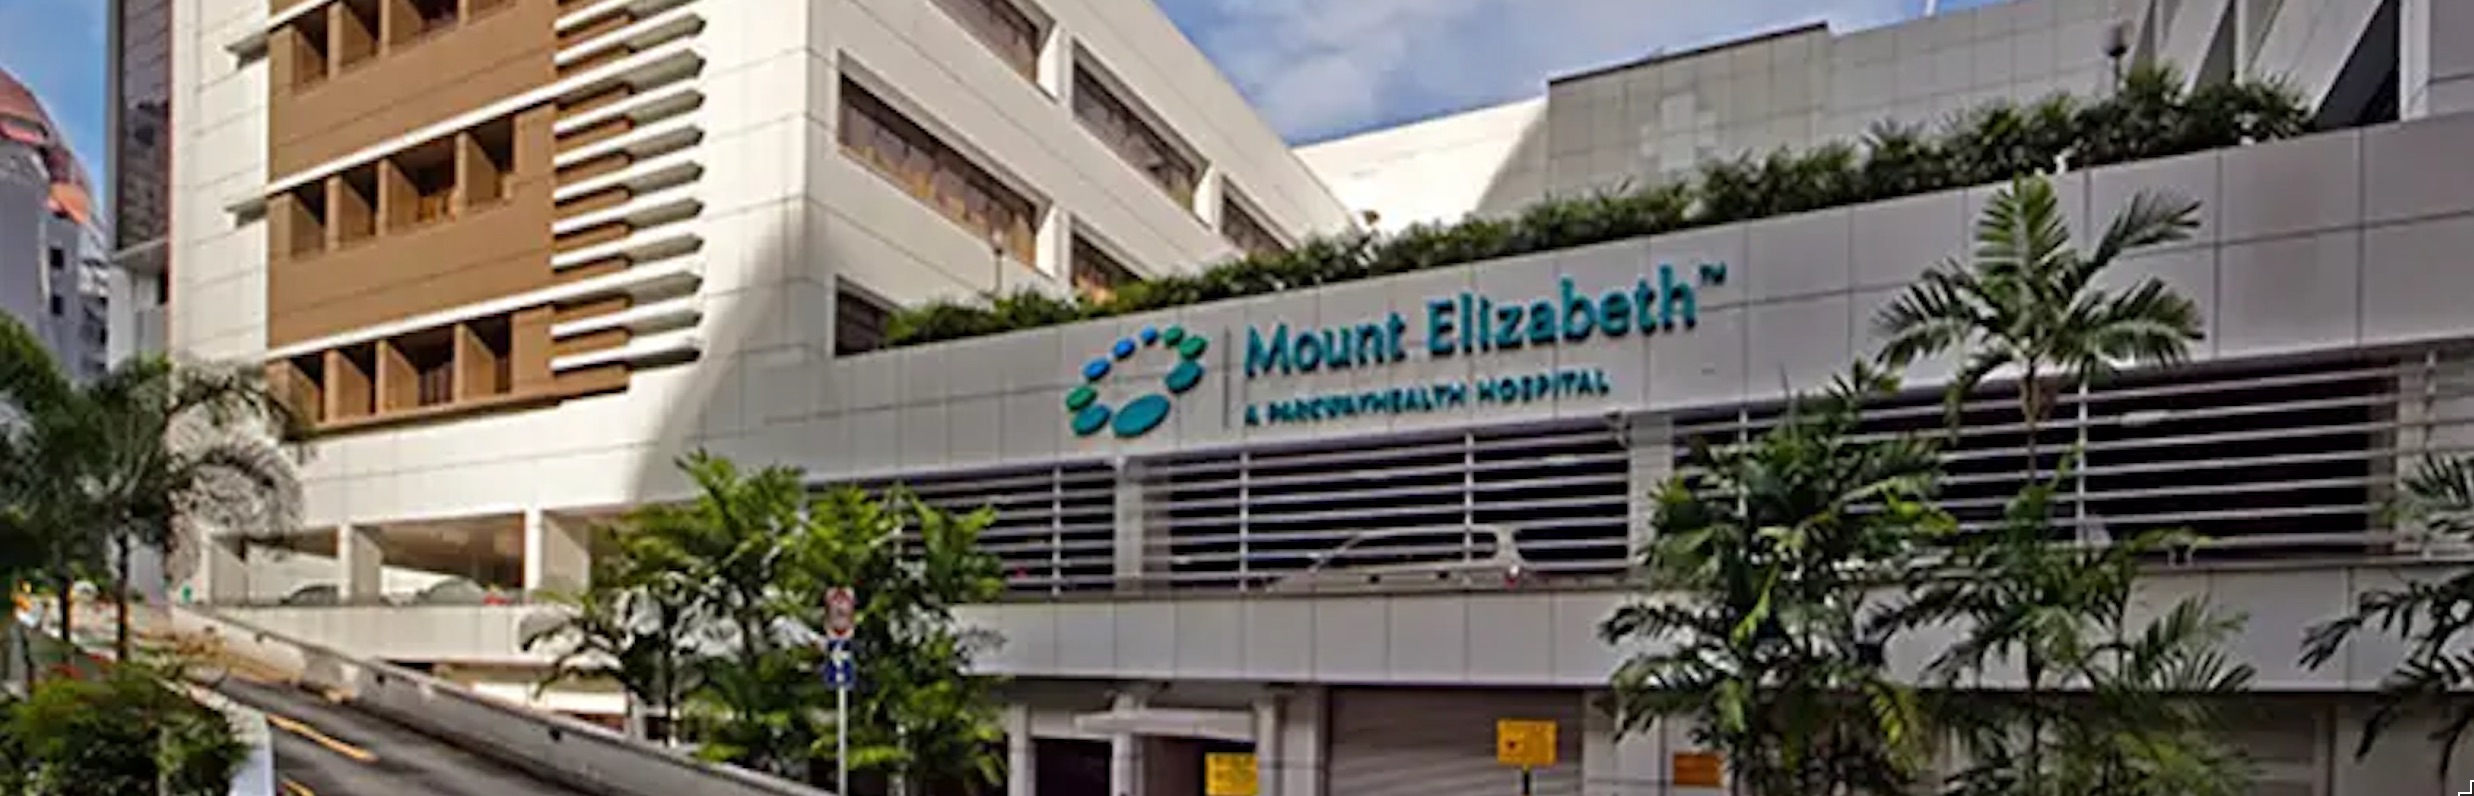 Mount Elizabeth (Orchard) Hospital